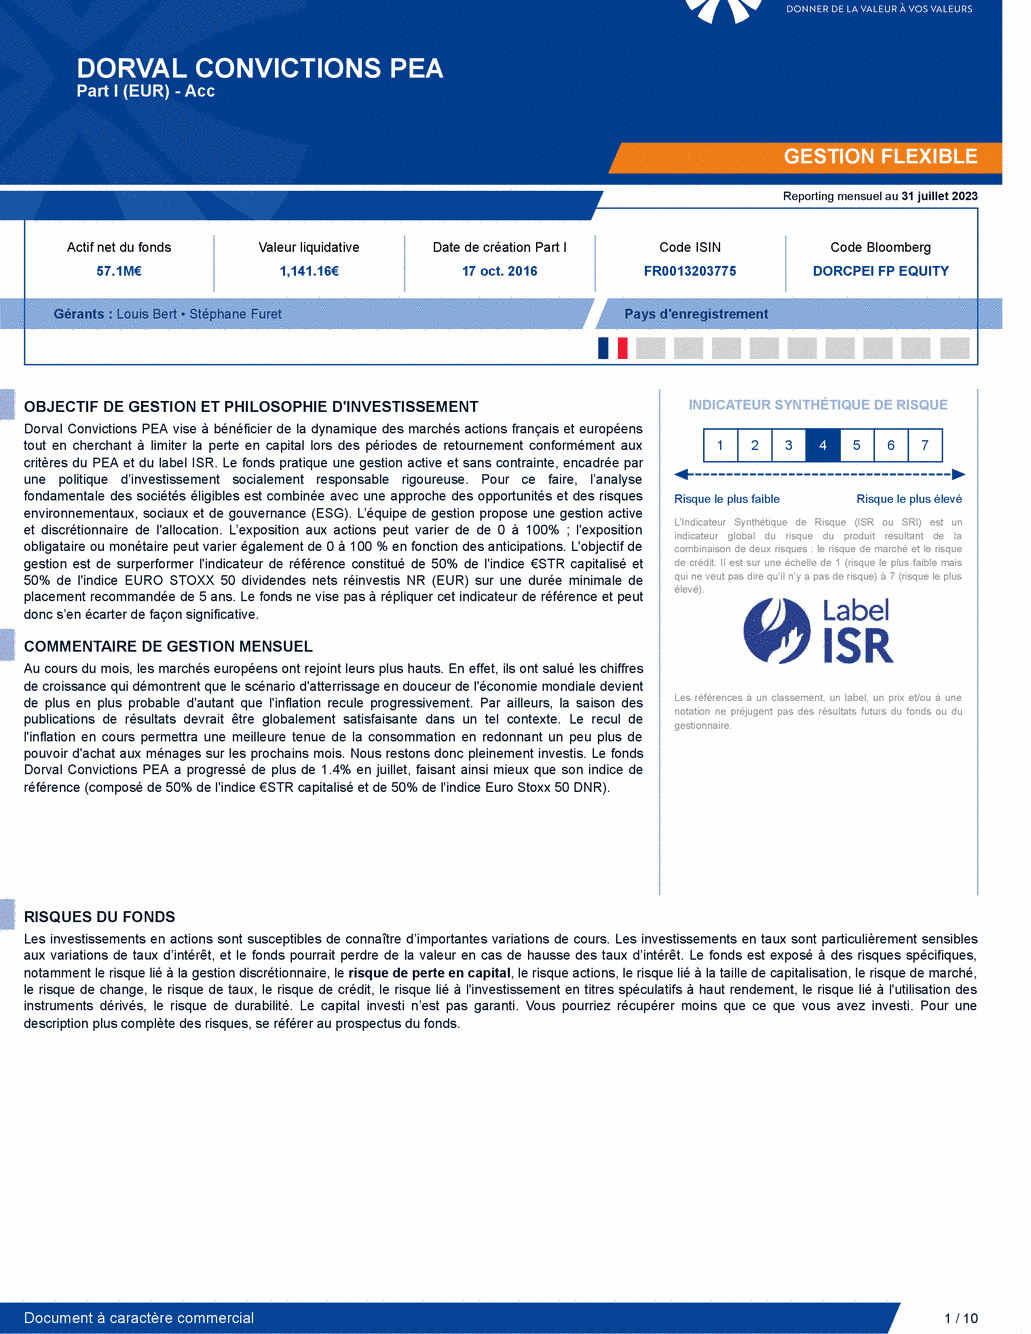 Reporting DORVAL CONVICTIONS PEA Part I - 31/07/2023 - Français